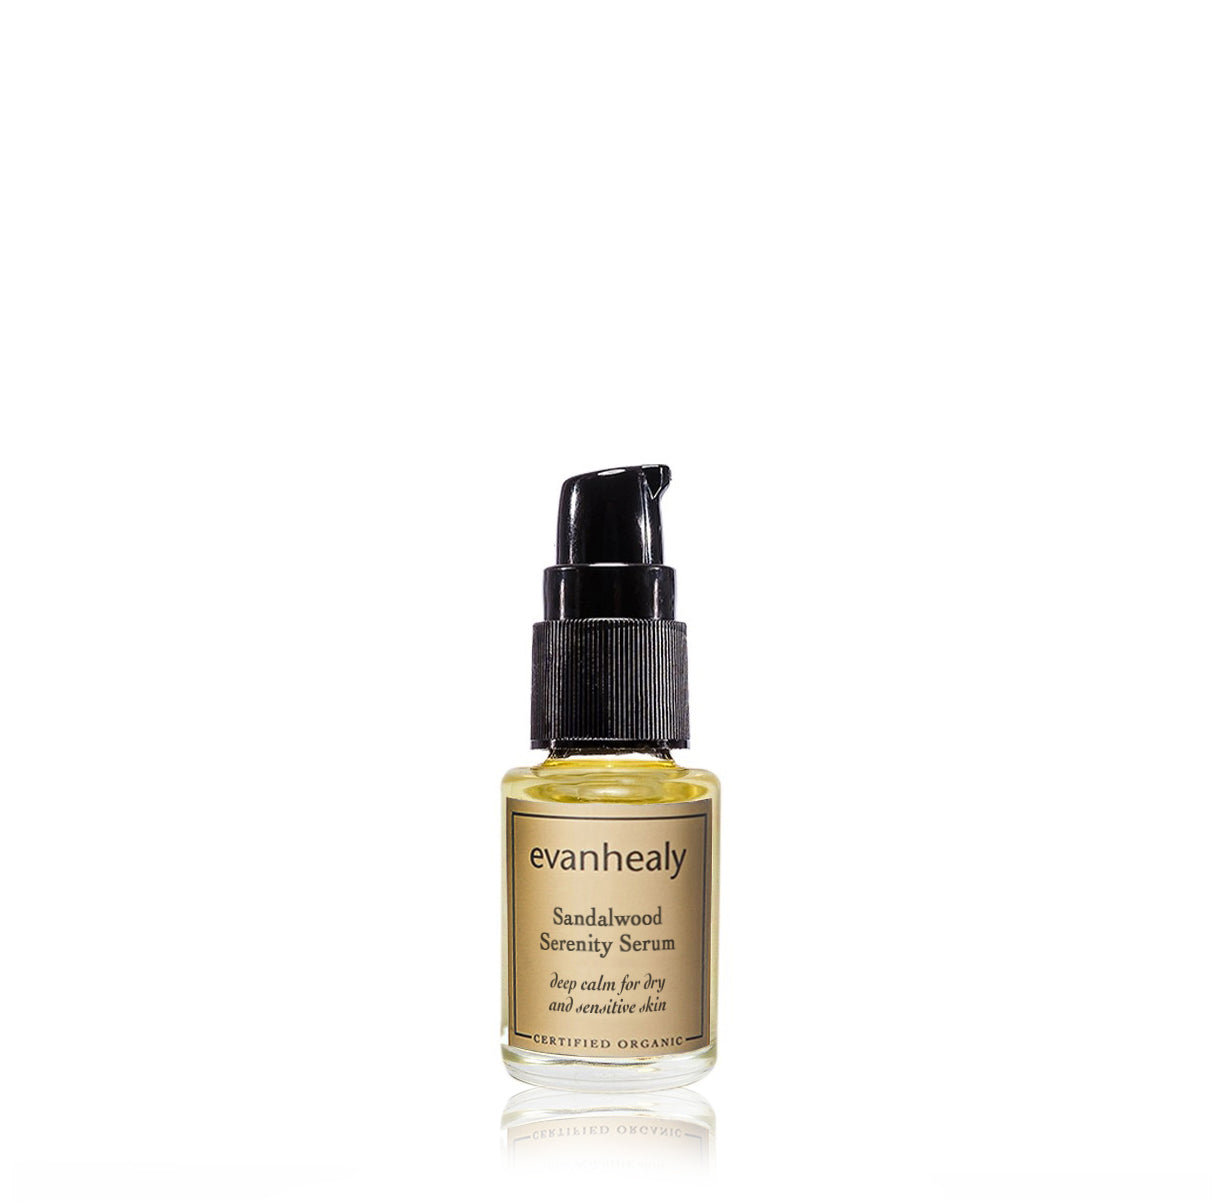 evanhealy sandalwood serenity serum skin care product facial oil